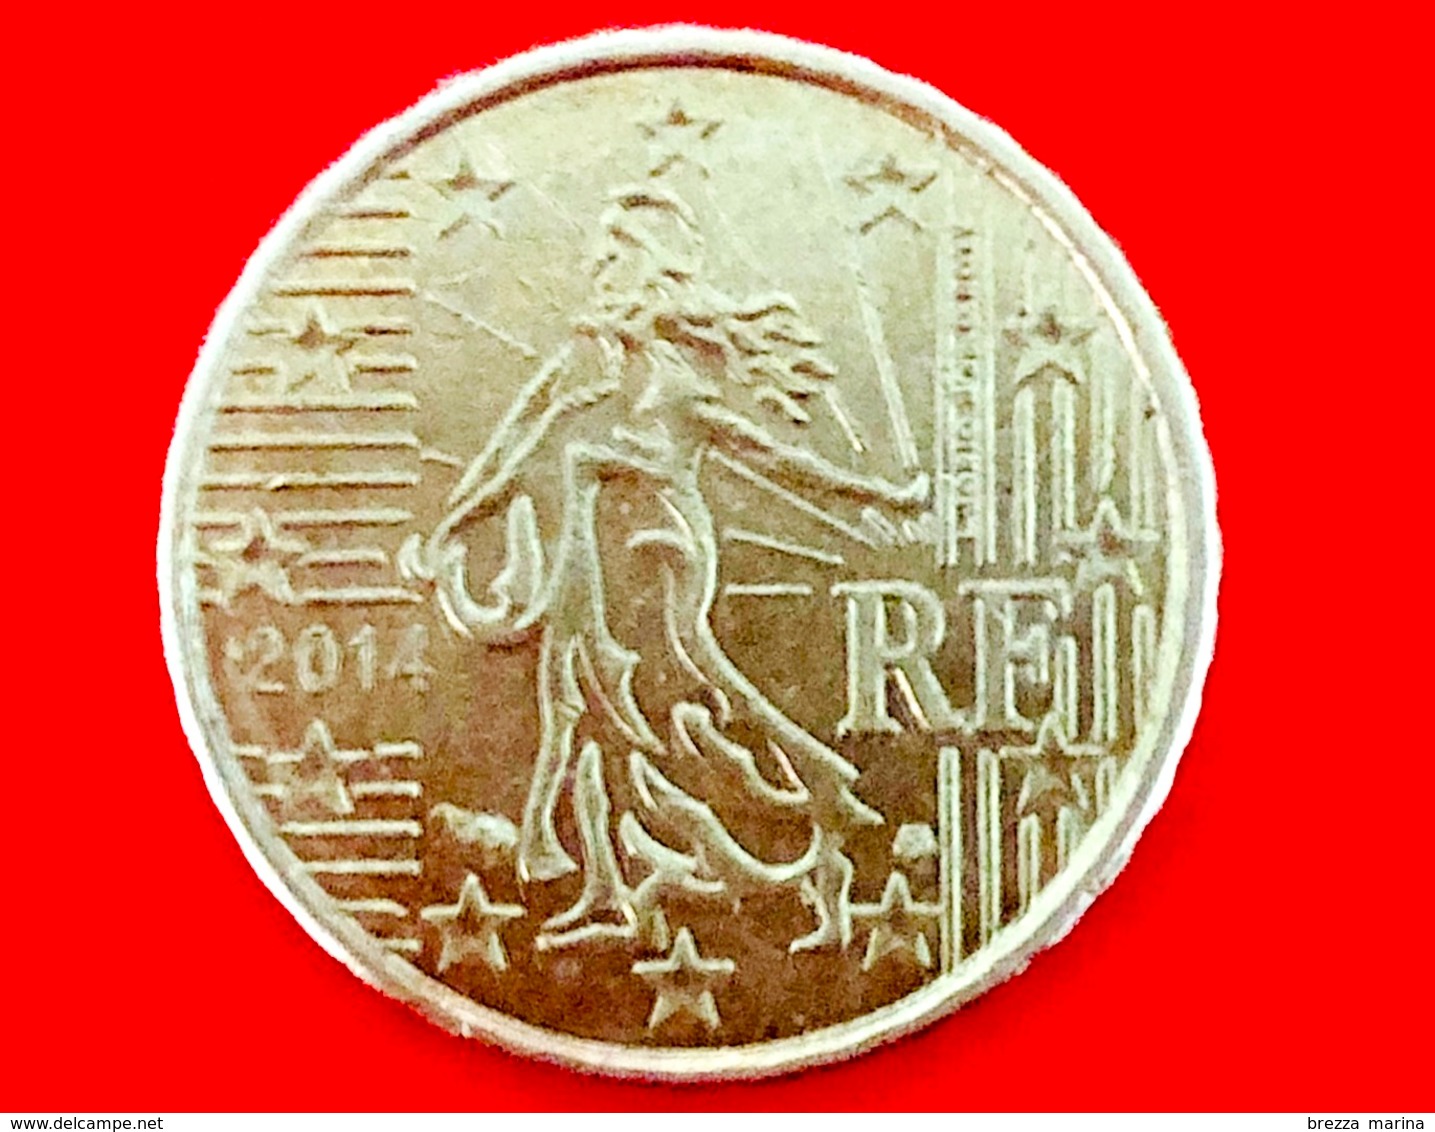 FRANCIA - 2014 - Moneta - Seminatrice - Euro - 0.10 - Francia